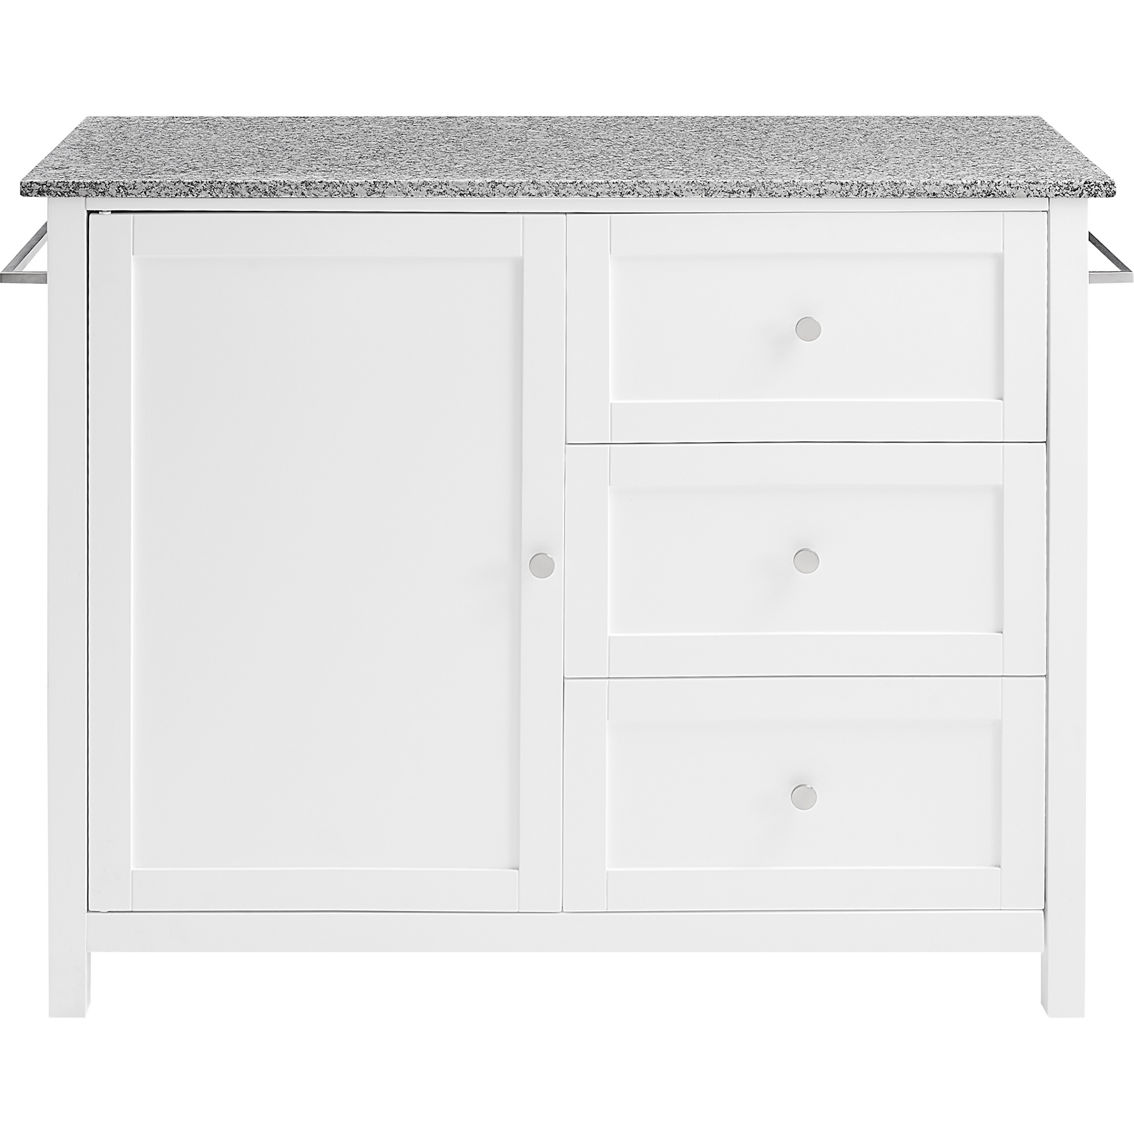 Crosley Furniture Soren Granite Top Kitchen Island/Cart - Image 6 of 10